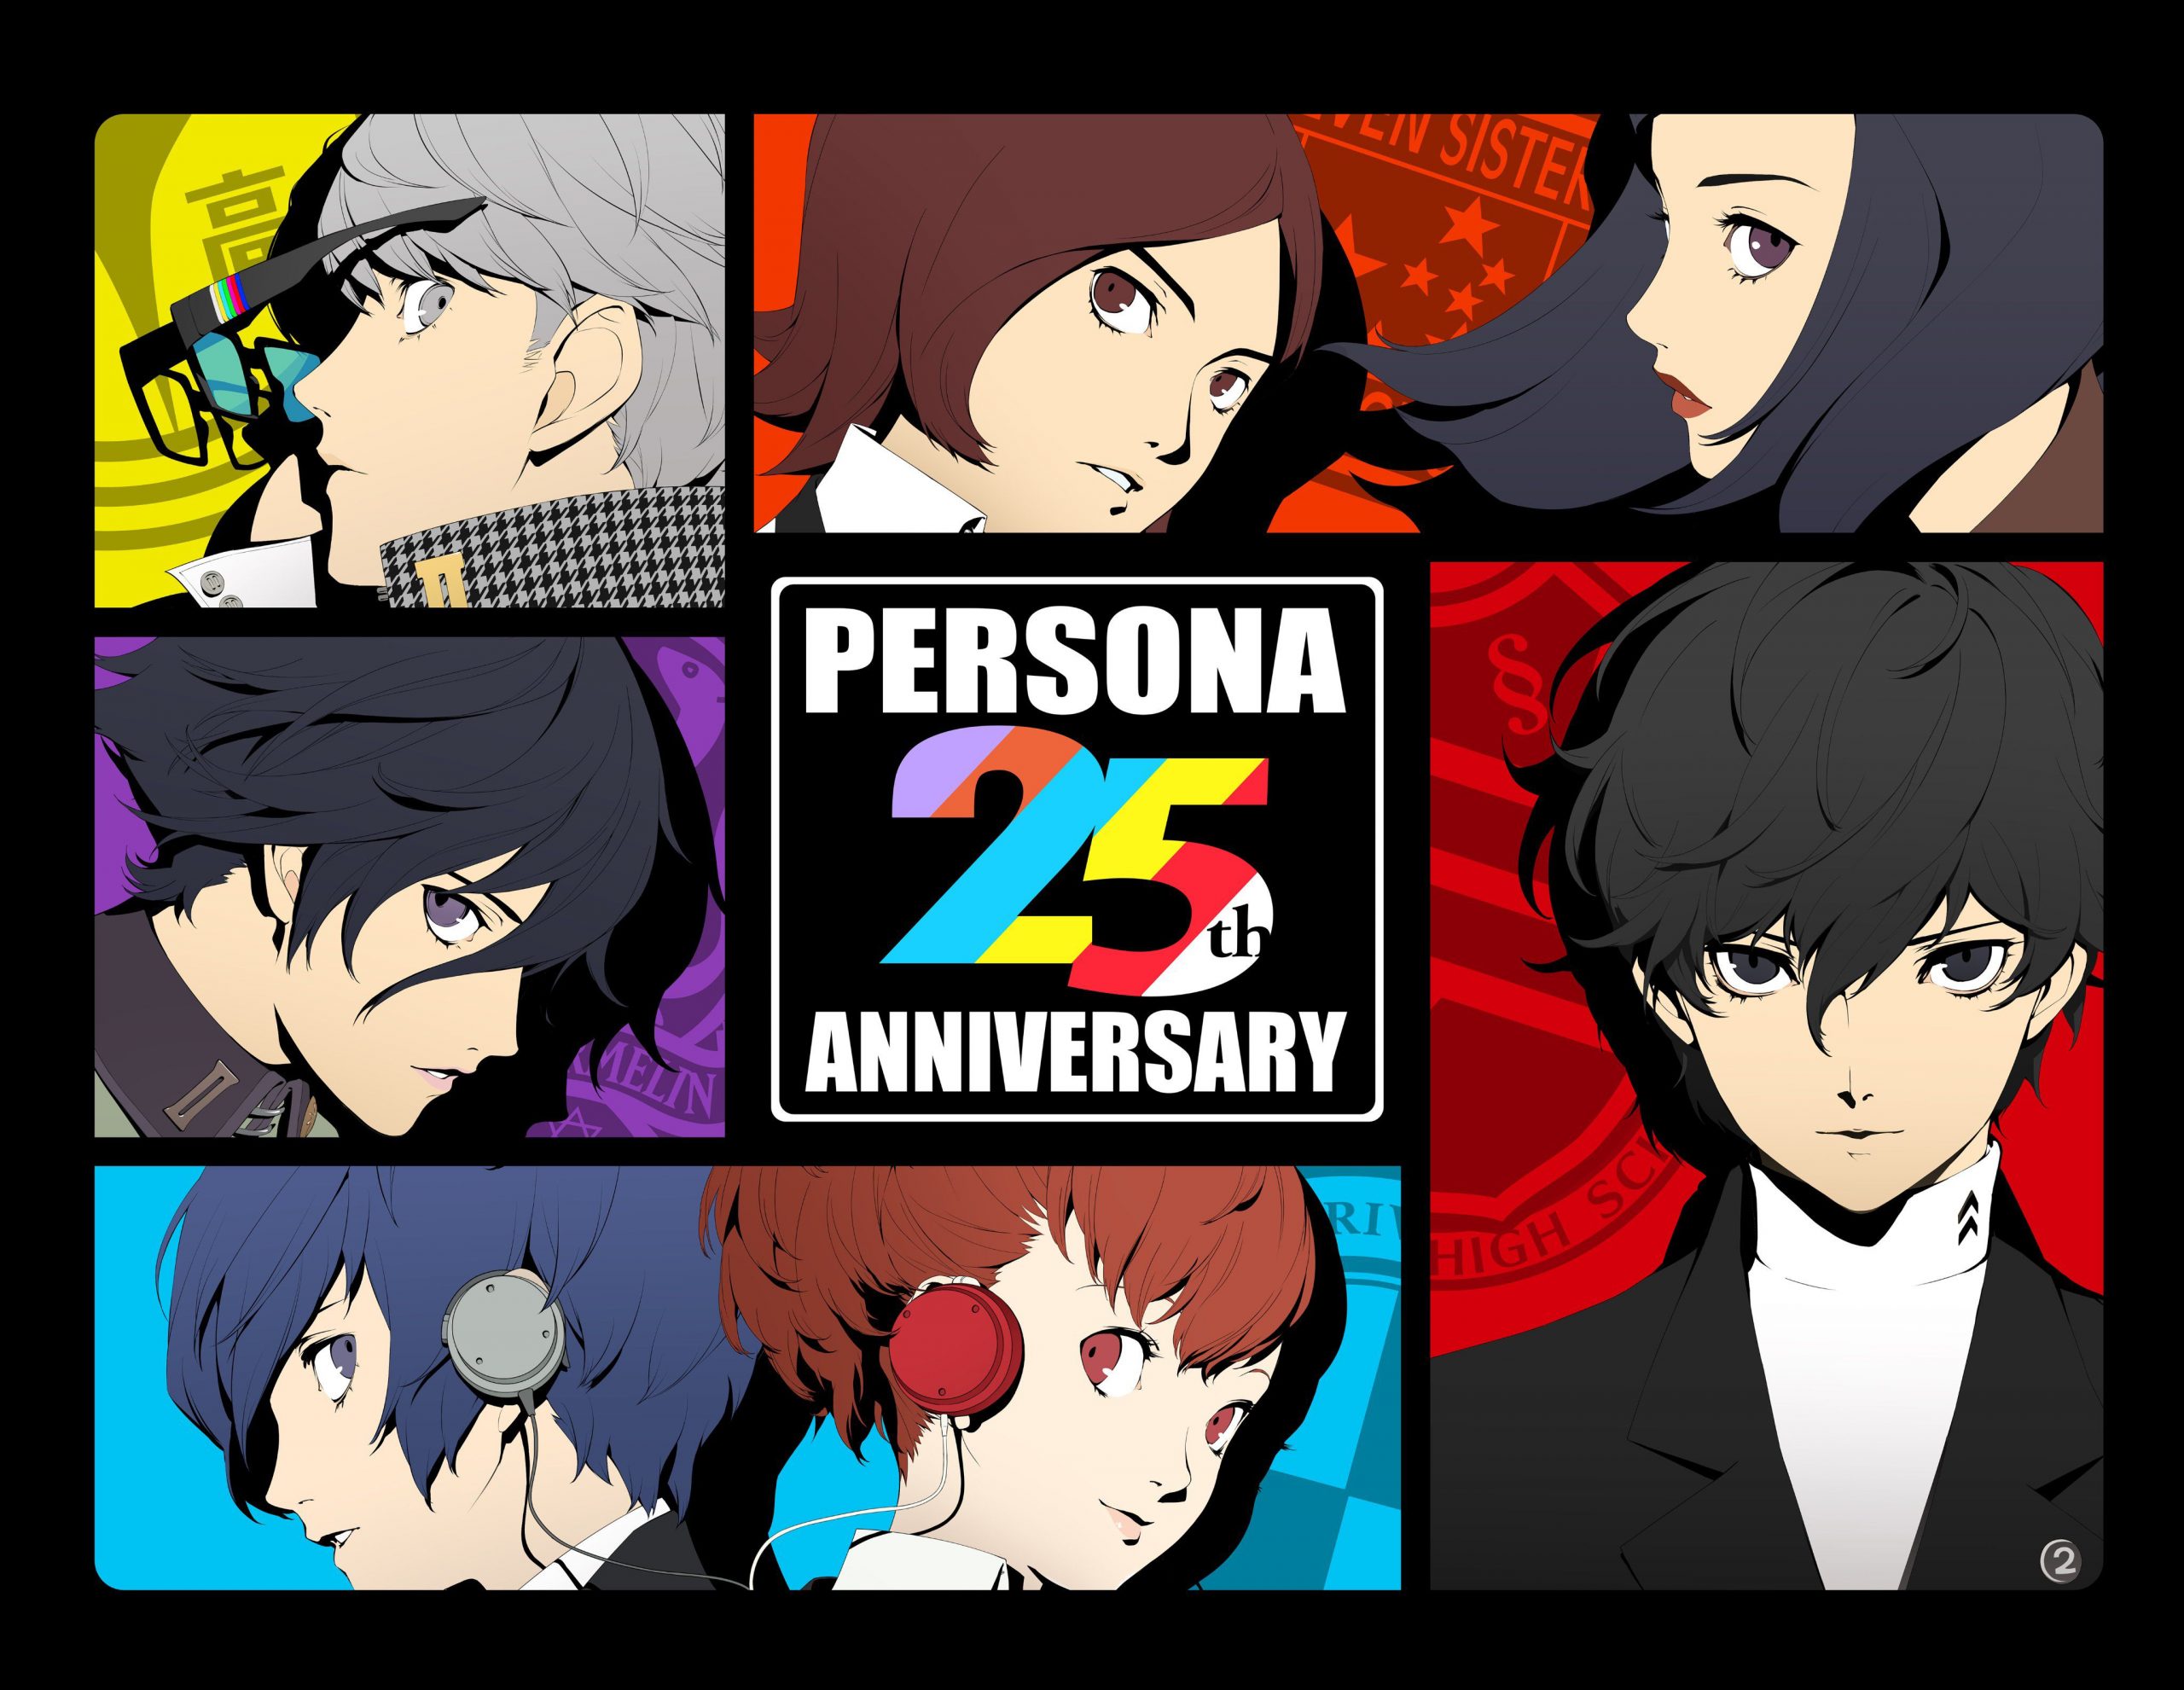 Persona 25 နှစ်မြောက်